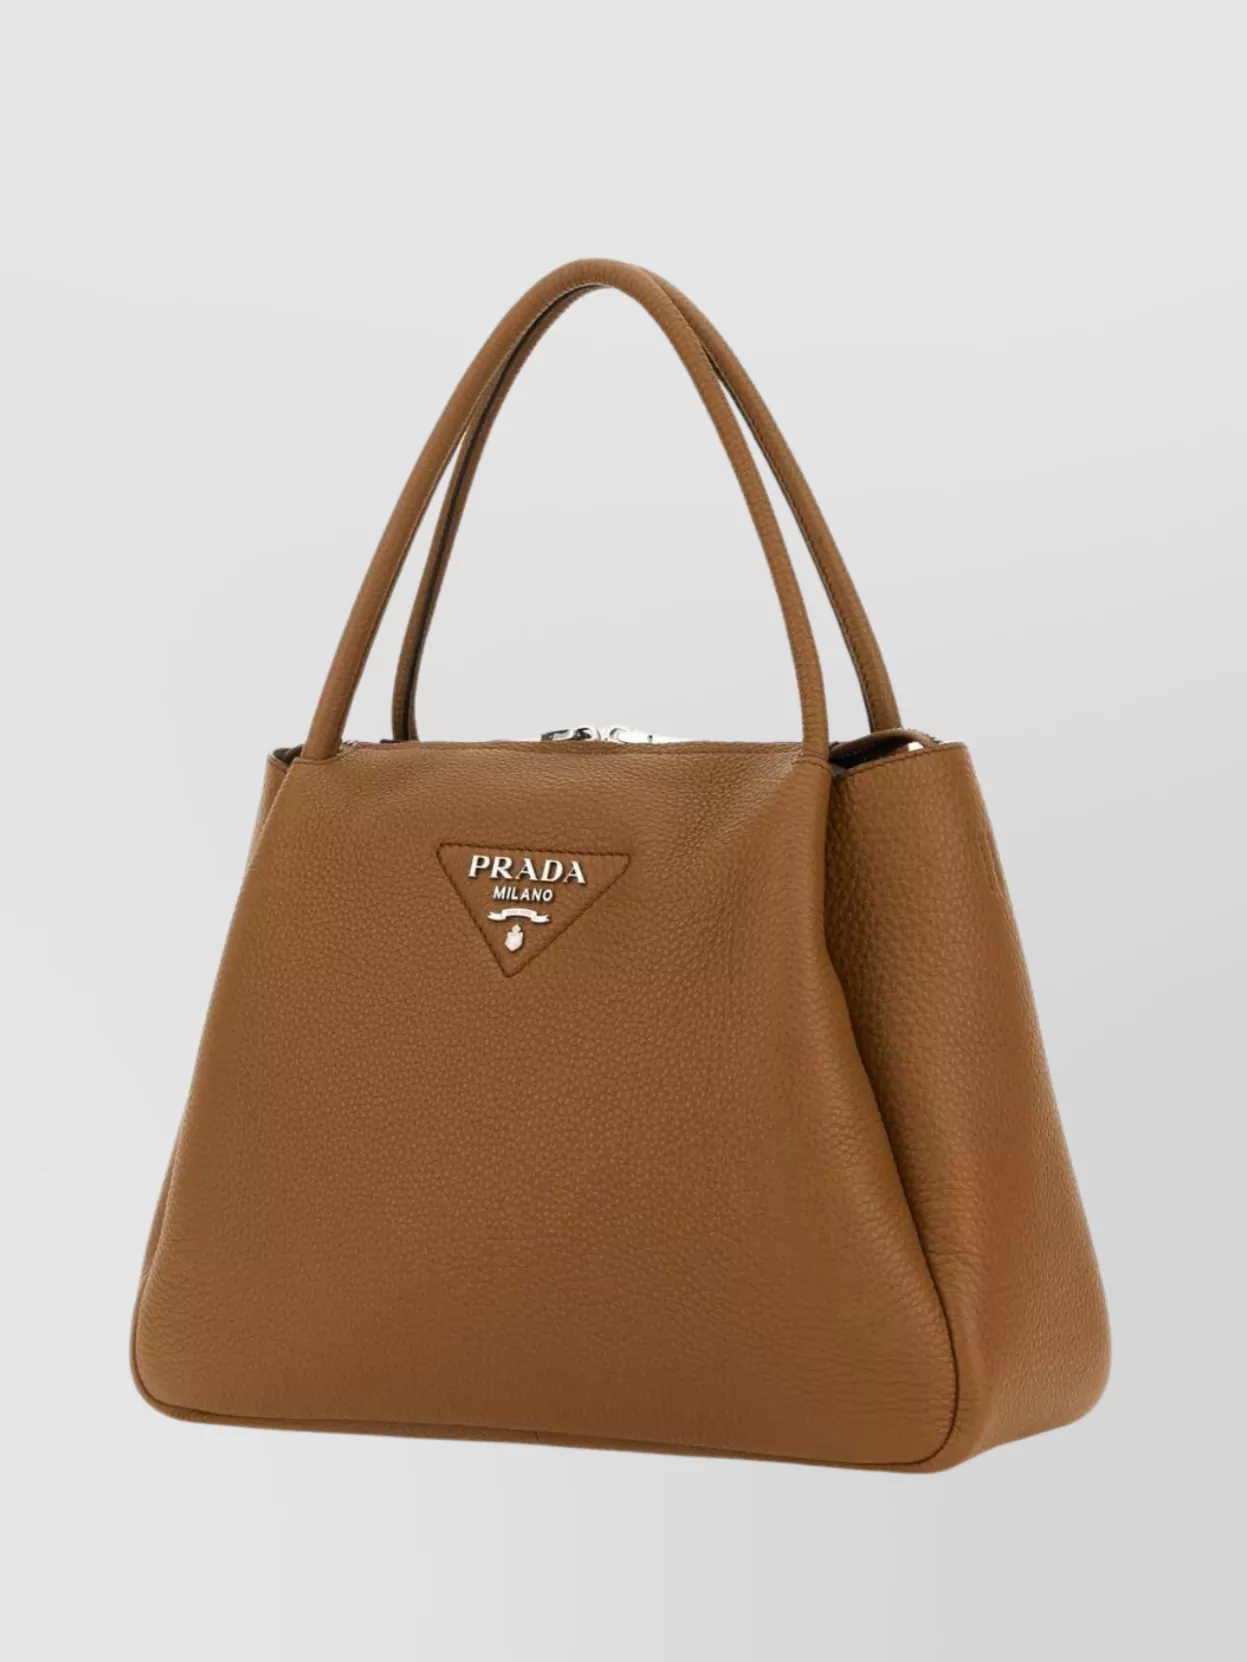 Prada Large Pebbled Texture Handbag With Top Handle In Animal Print